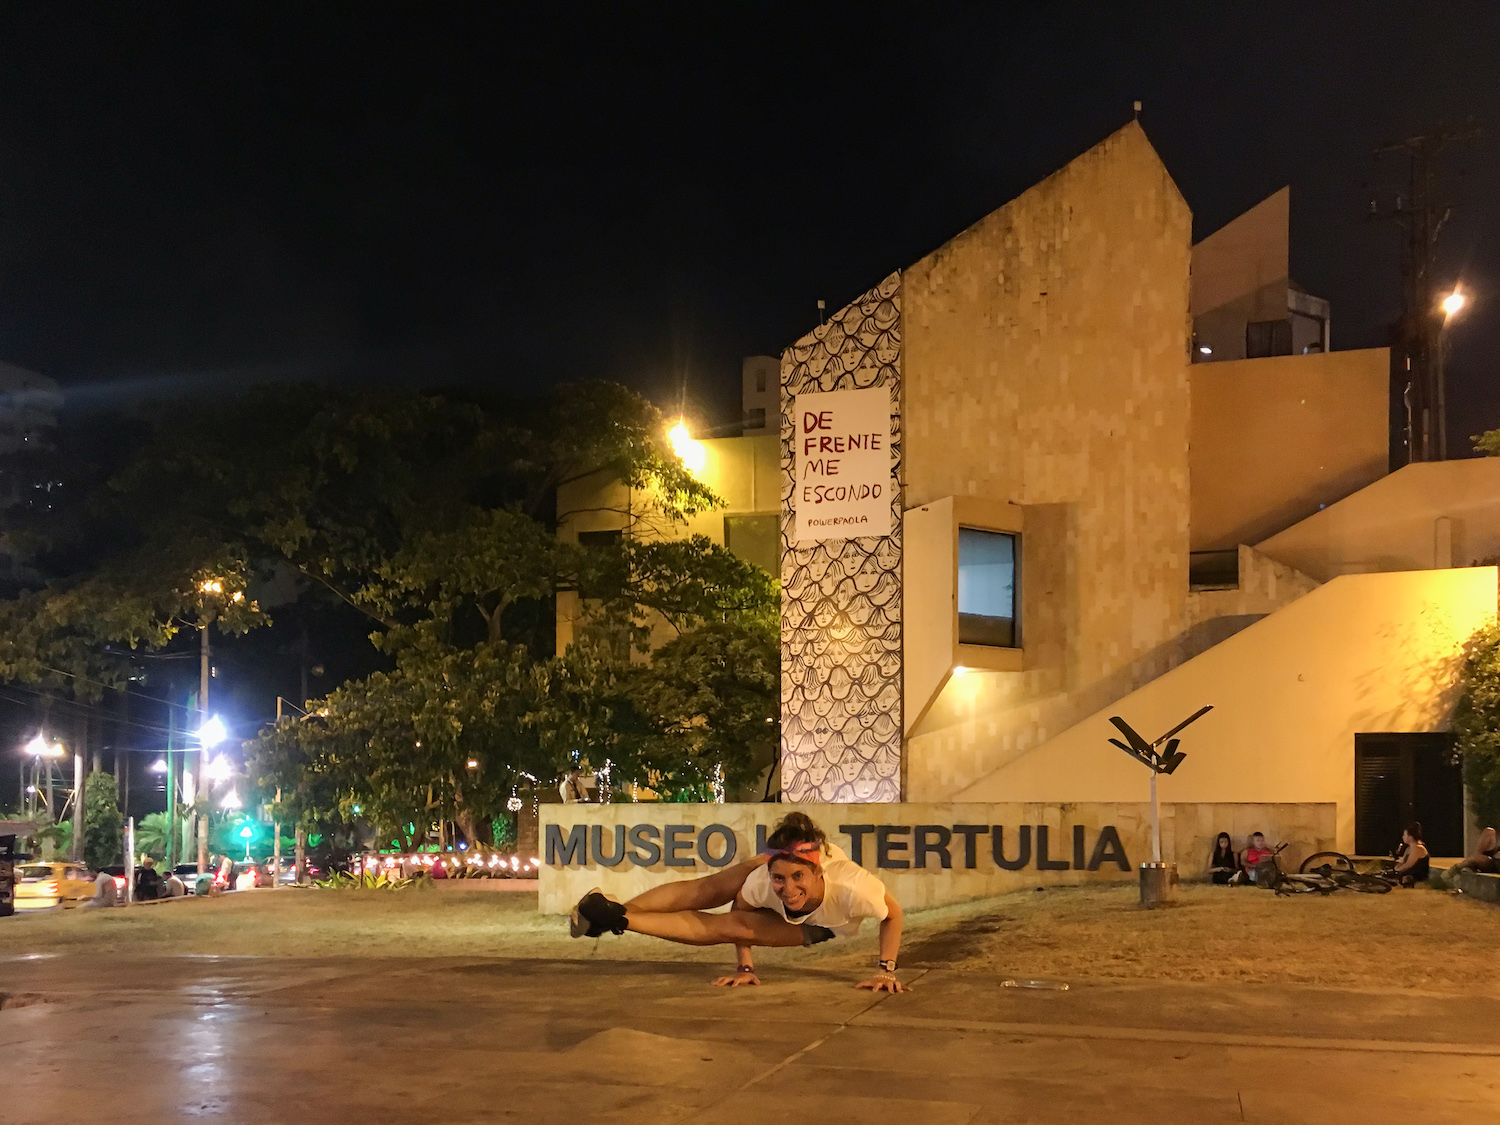 La Tertulia Museum (and Clau doing some yoga!)